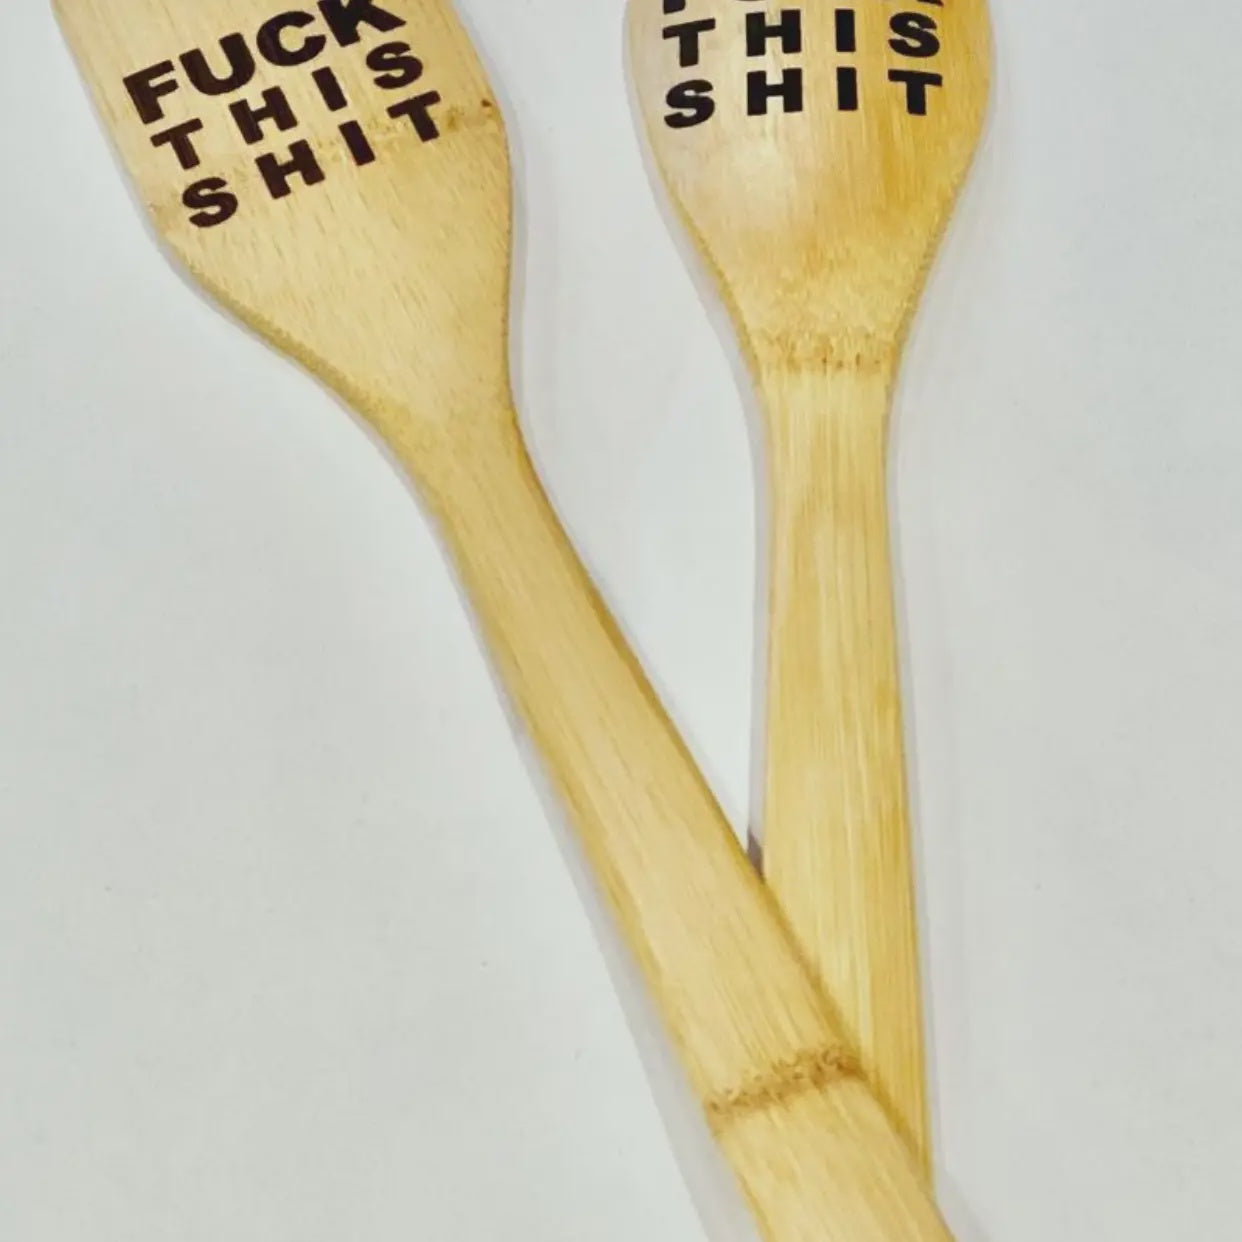 Fuck This Shit Wood Spoon/Spatula